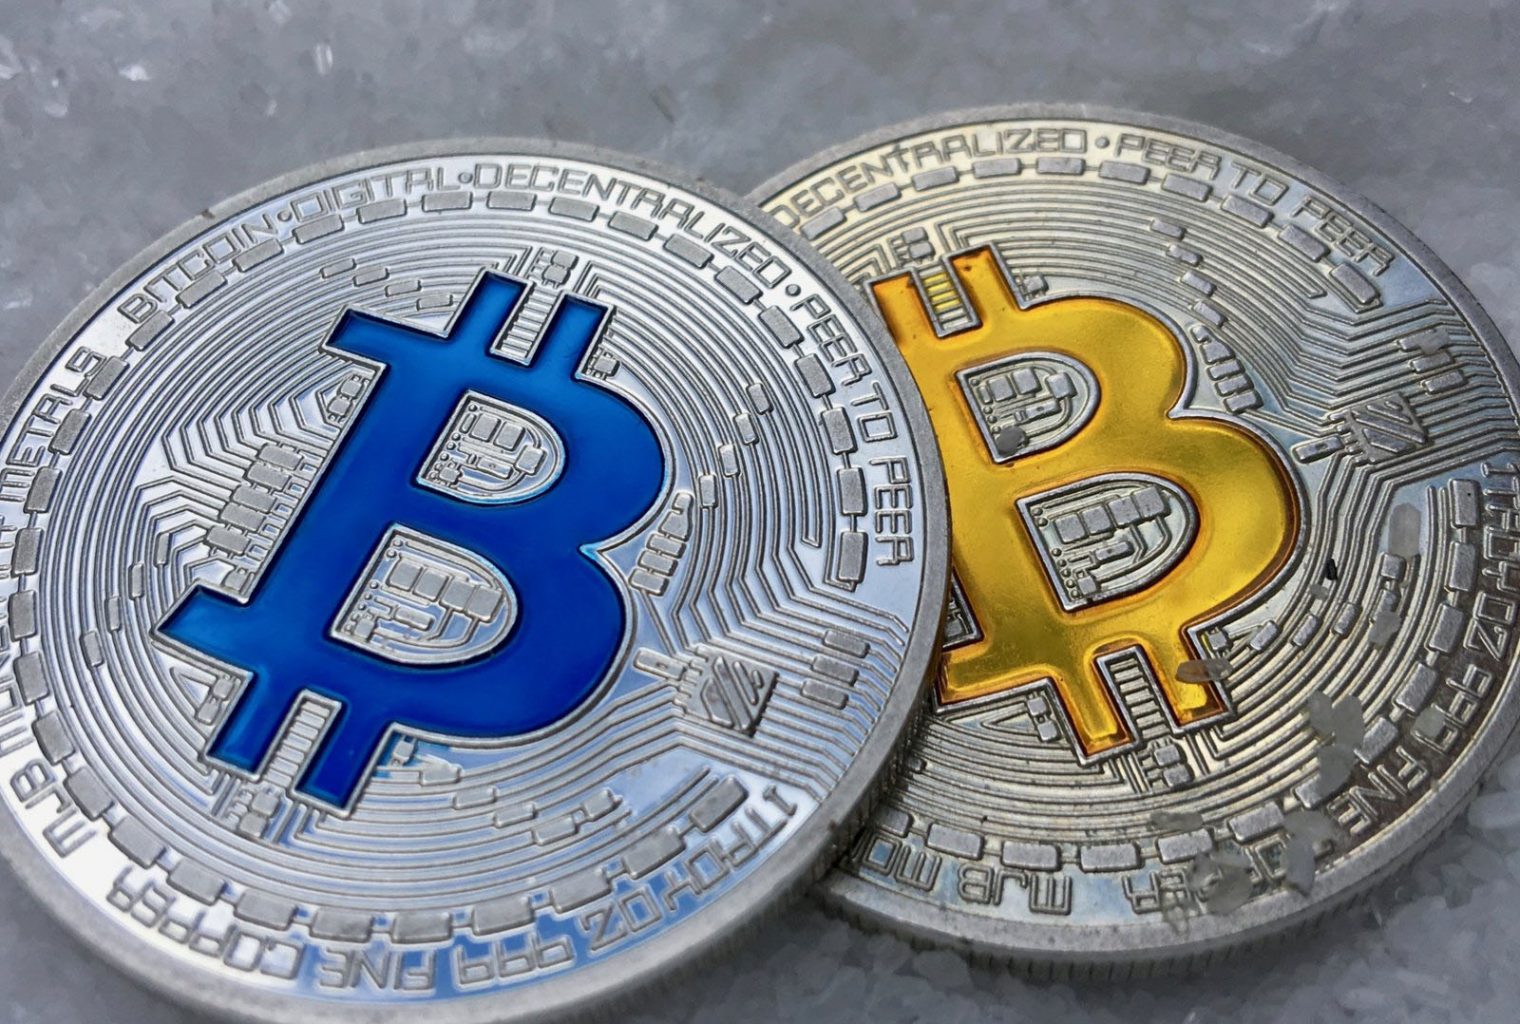 Gavin Andresen Throws Support Behind Bitcoin Cash - 